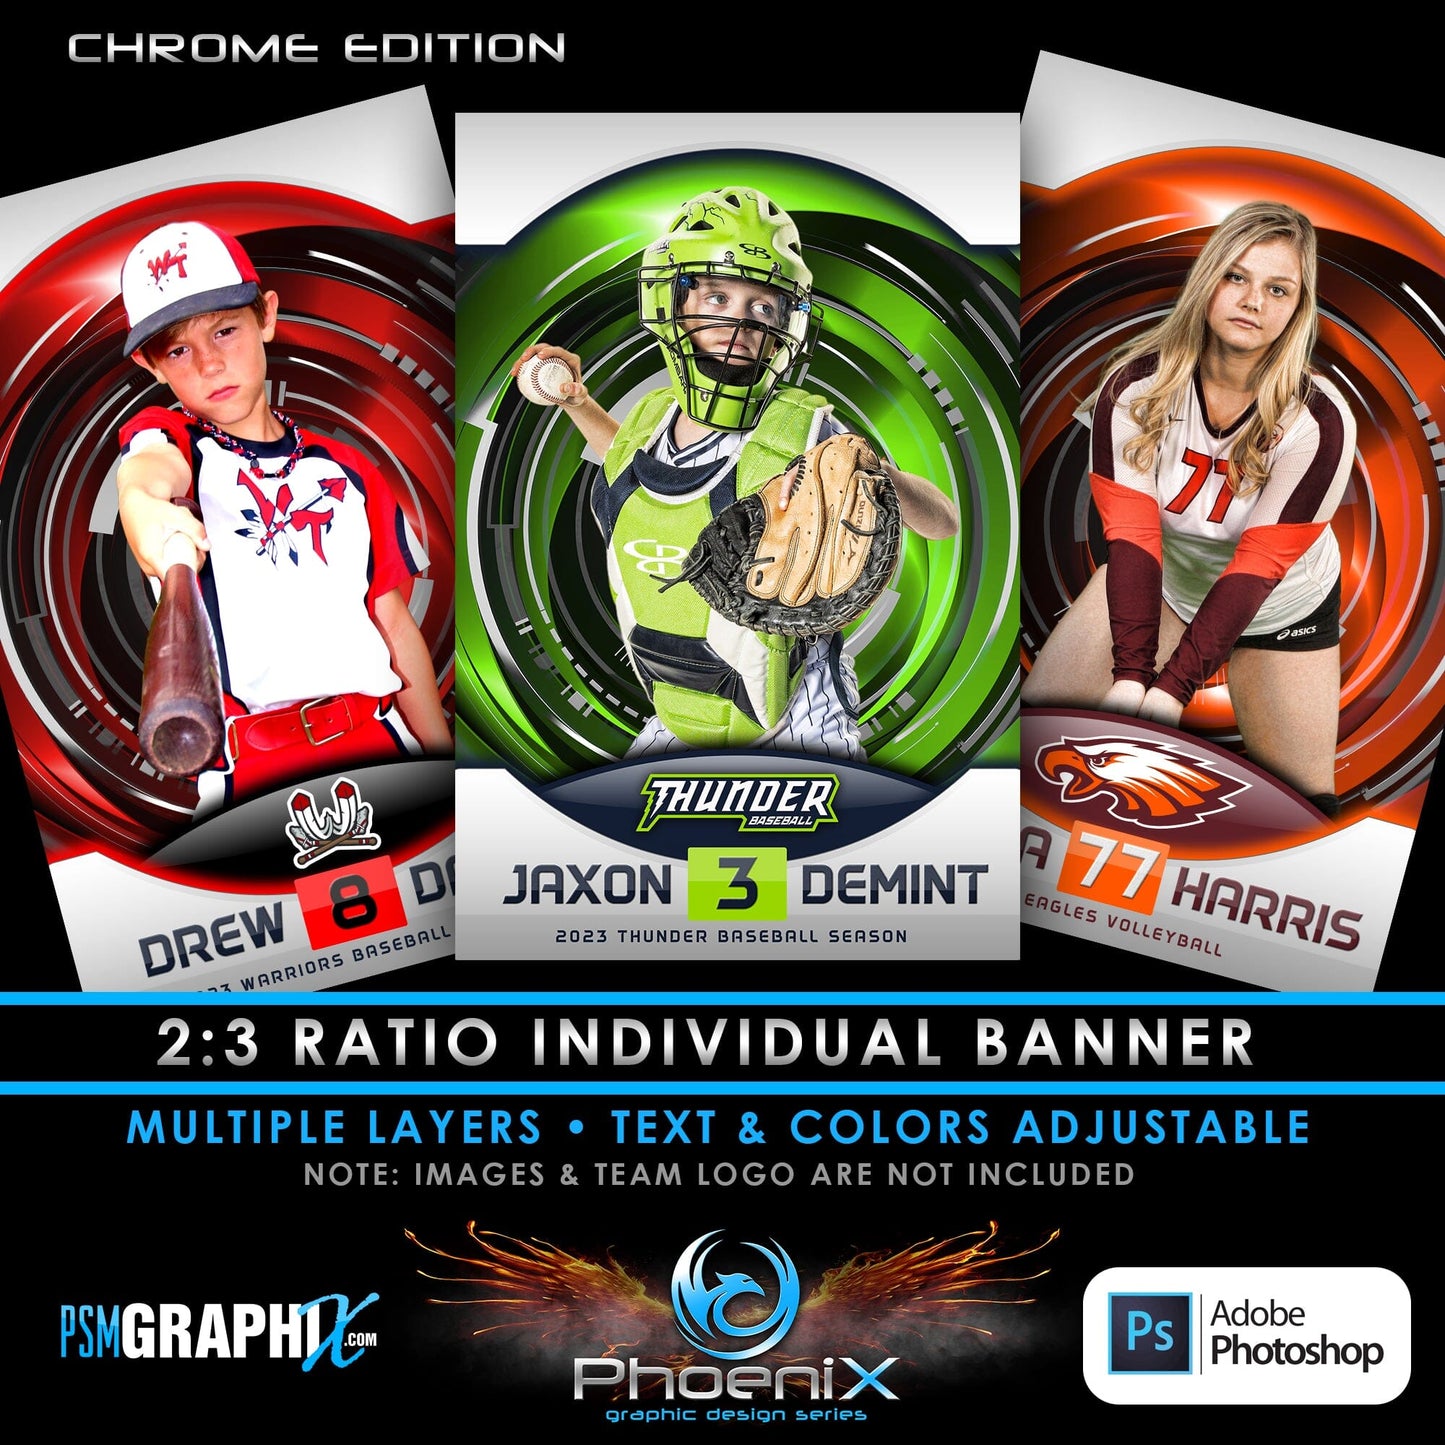 CHROME - Phoenix Series - Poster/Banner Template-Photoshop Template - PSMGraphix